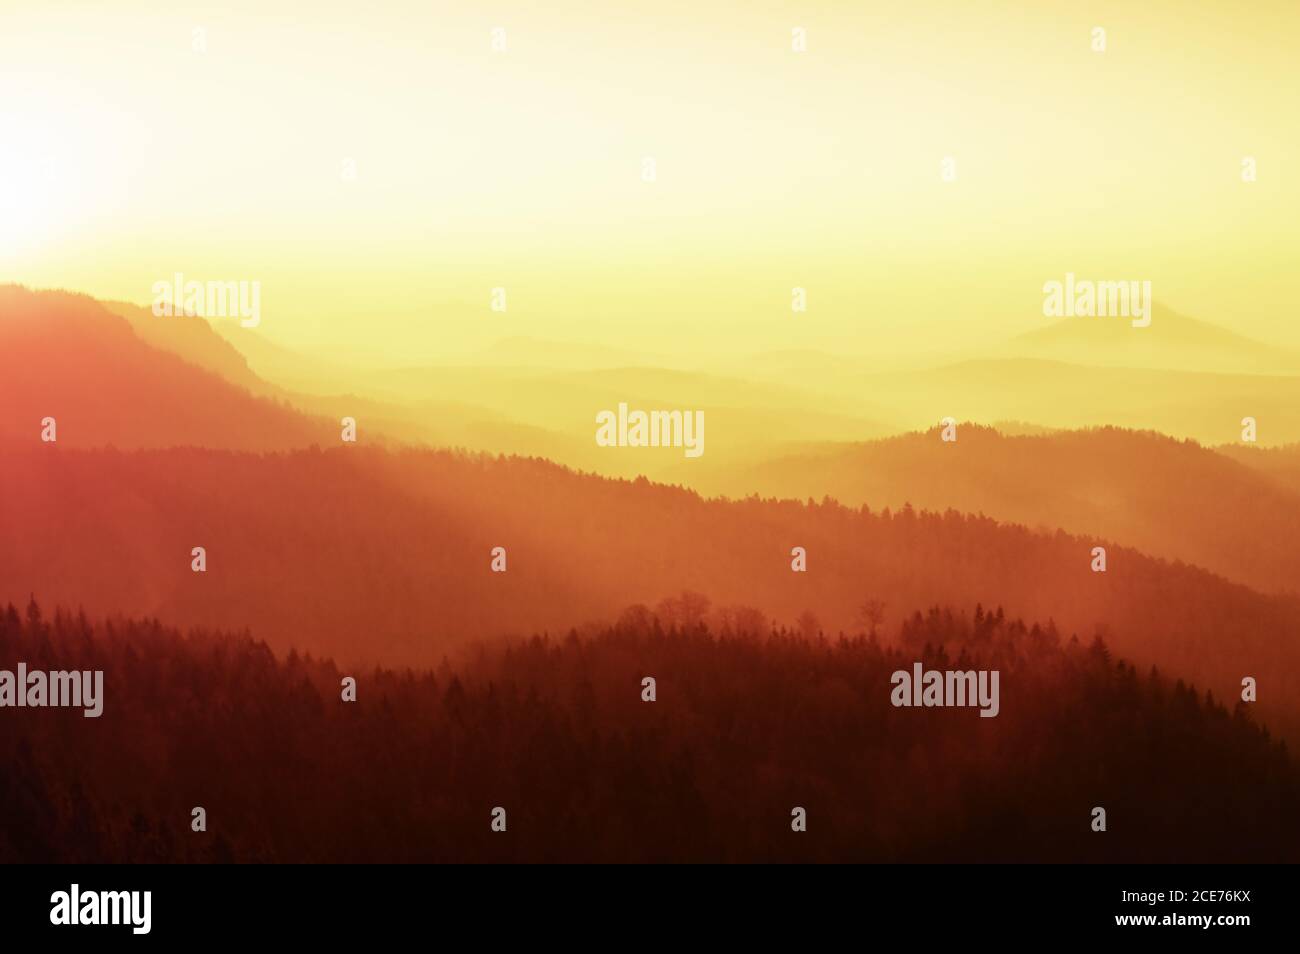 Dreamy fogy landscape, gentle orange misty sunrise Stock Photo